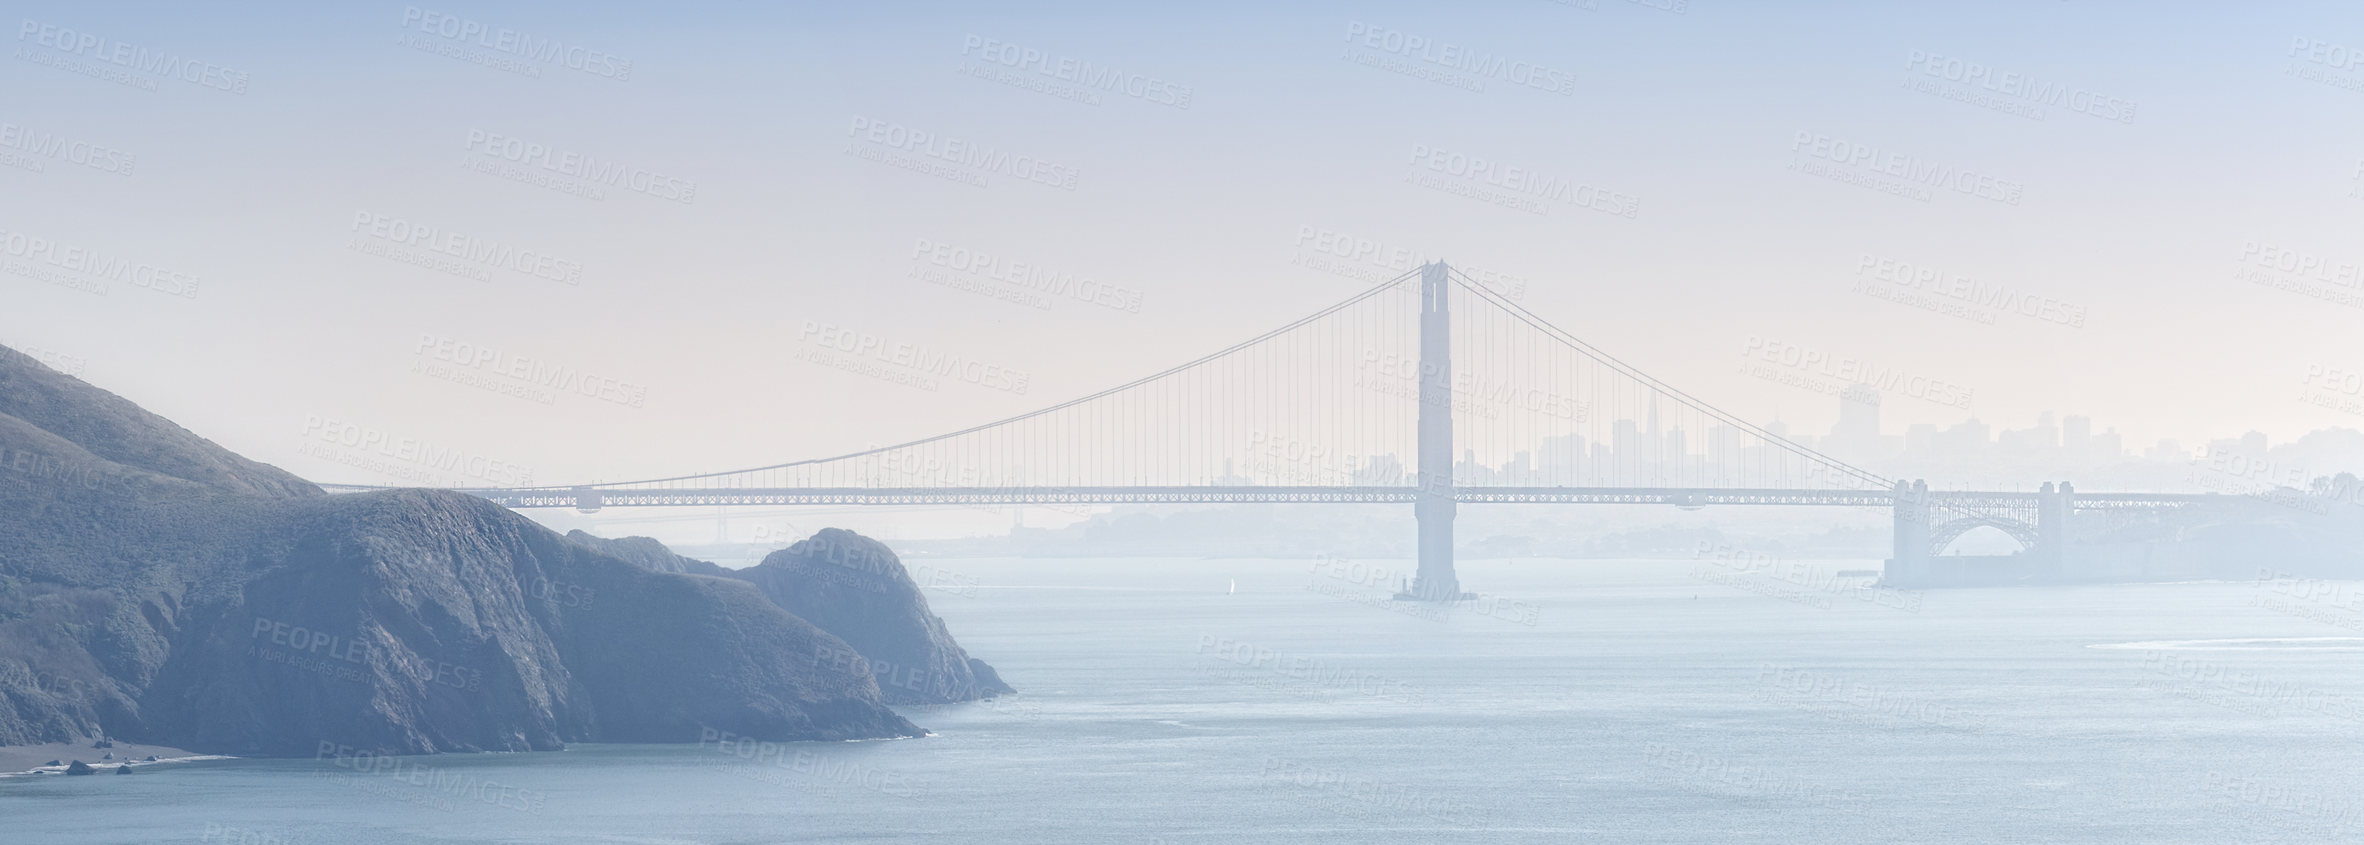 Buy stock photo Photo of the Golden Gate Bridge, San Francisco